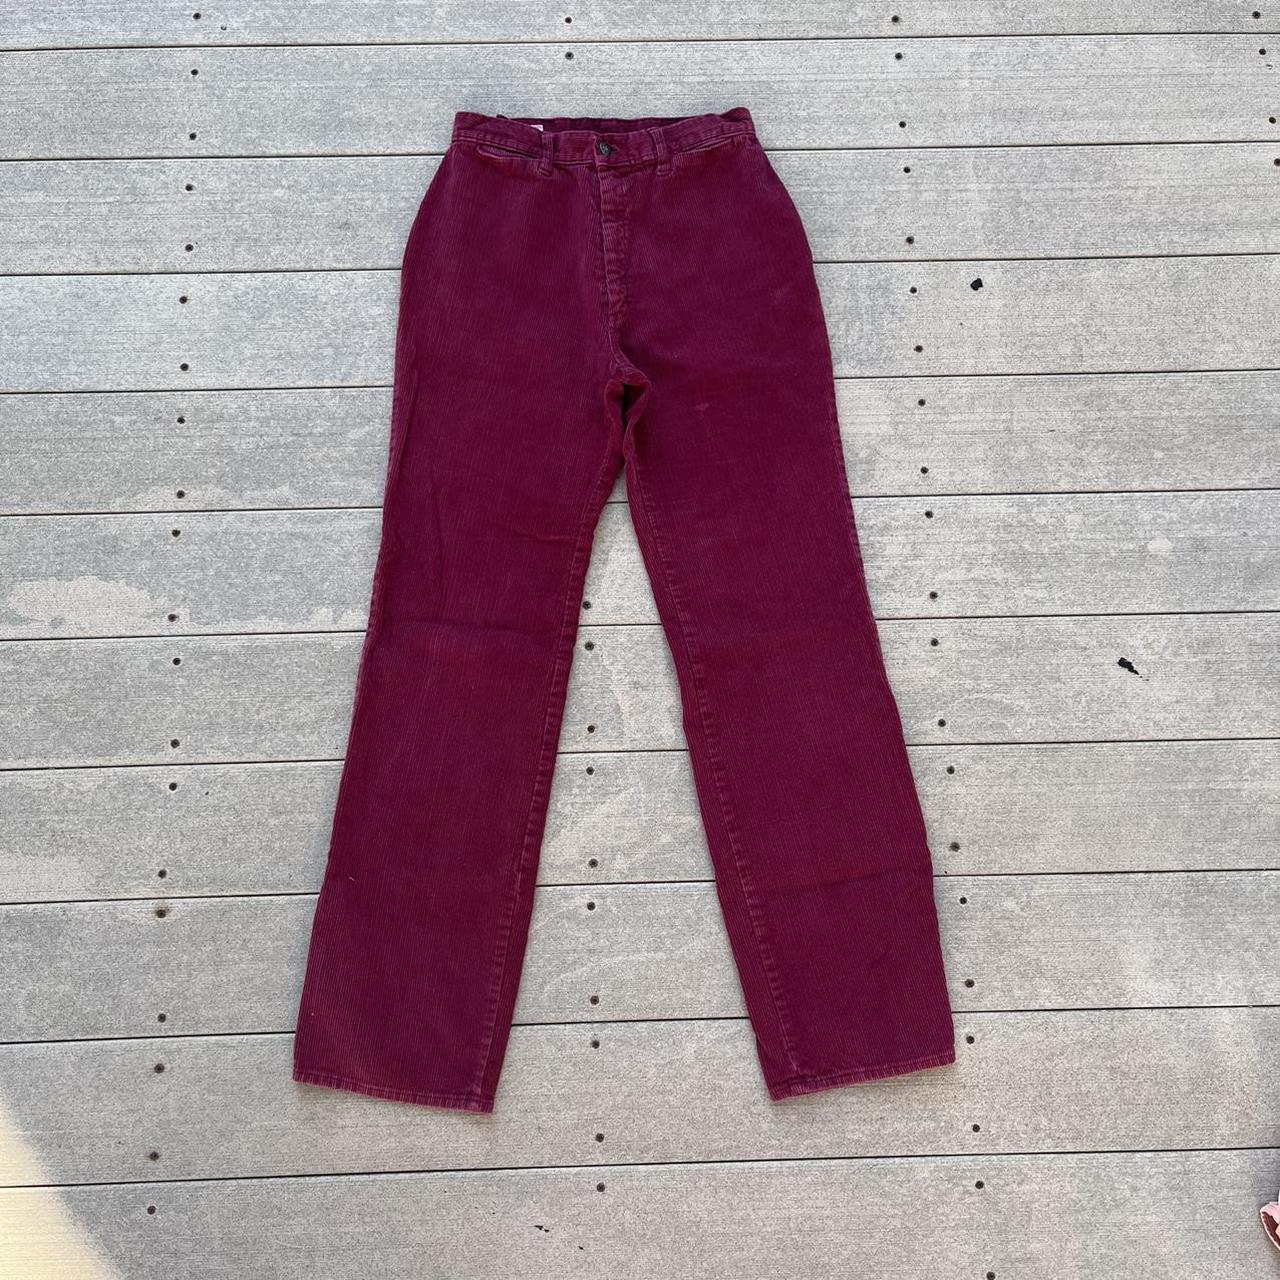 Vintage corduroy pants Brand: Woolco Size: Marked... - Depop